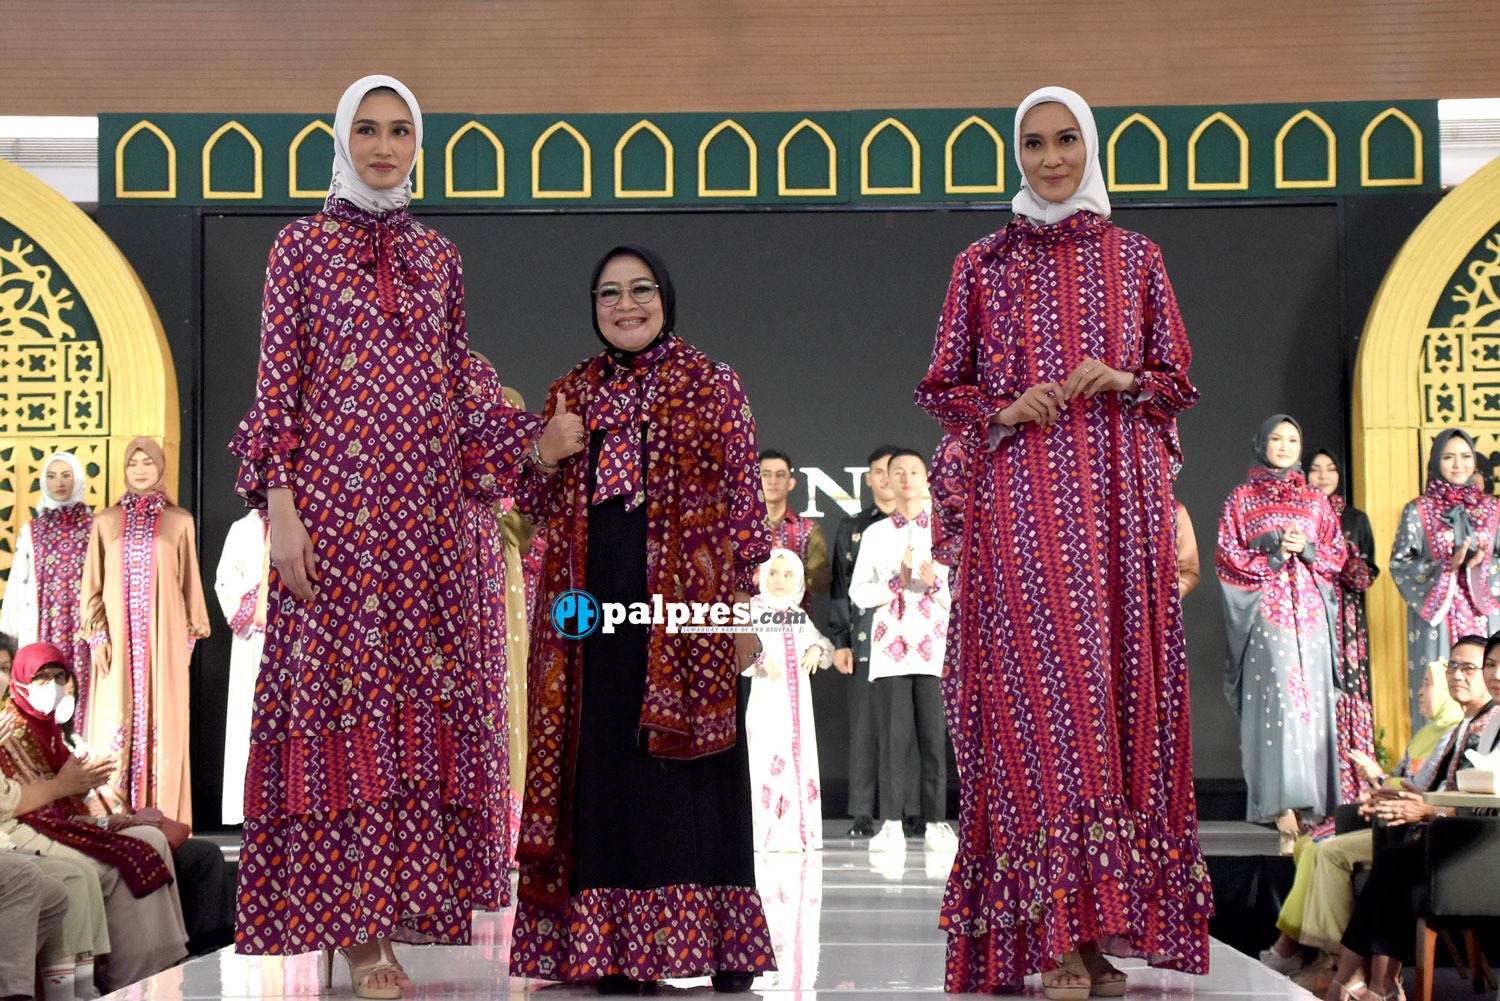 Sekda Palembang Ratu Dewa Apresiasi Fashion Show Rumah Busana Tria